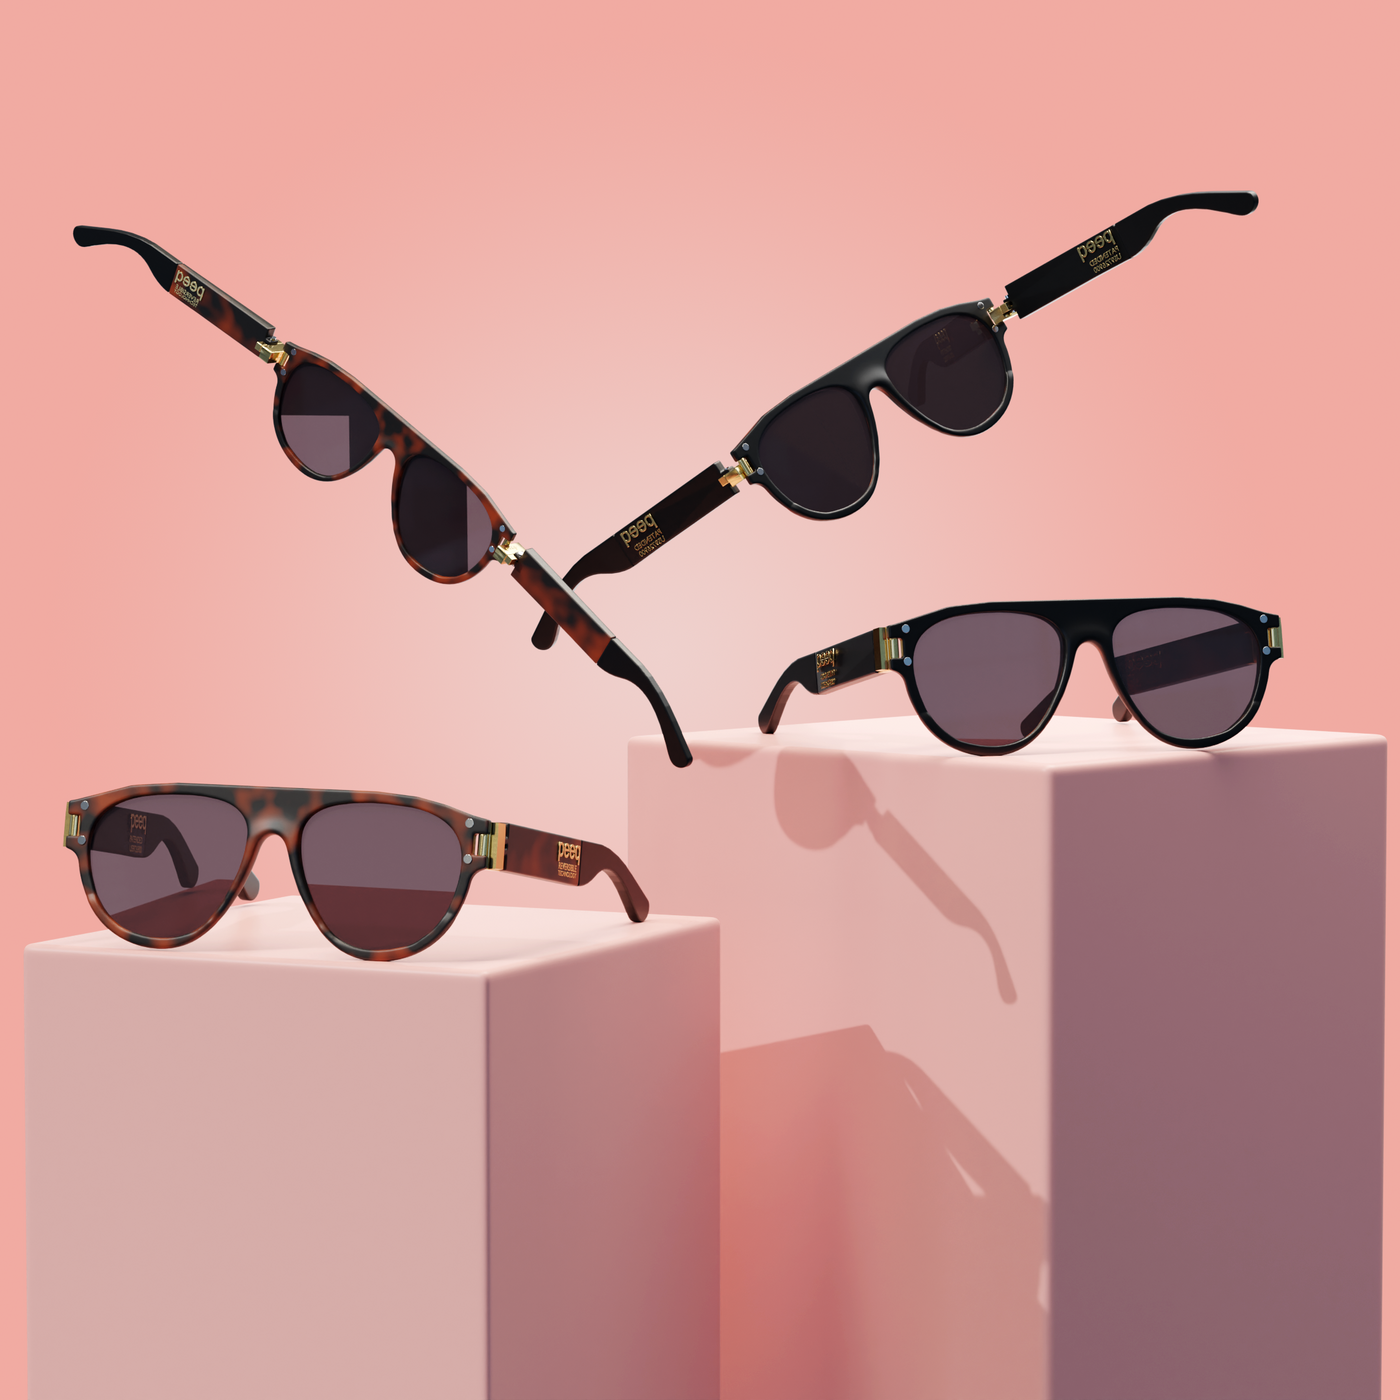 Can sunglasses make someone more attractive (according to science)?